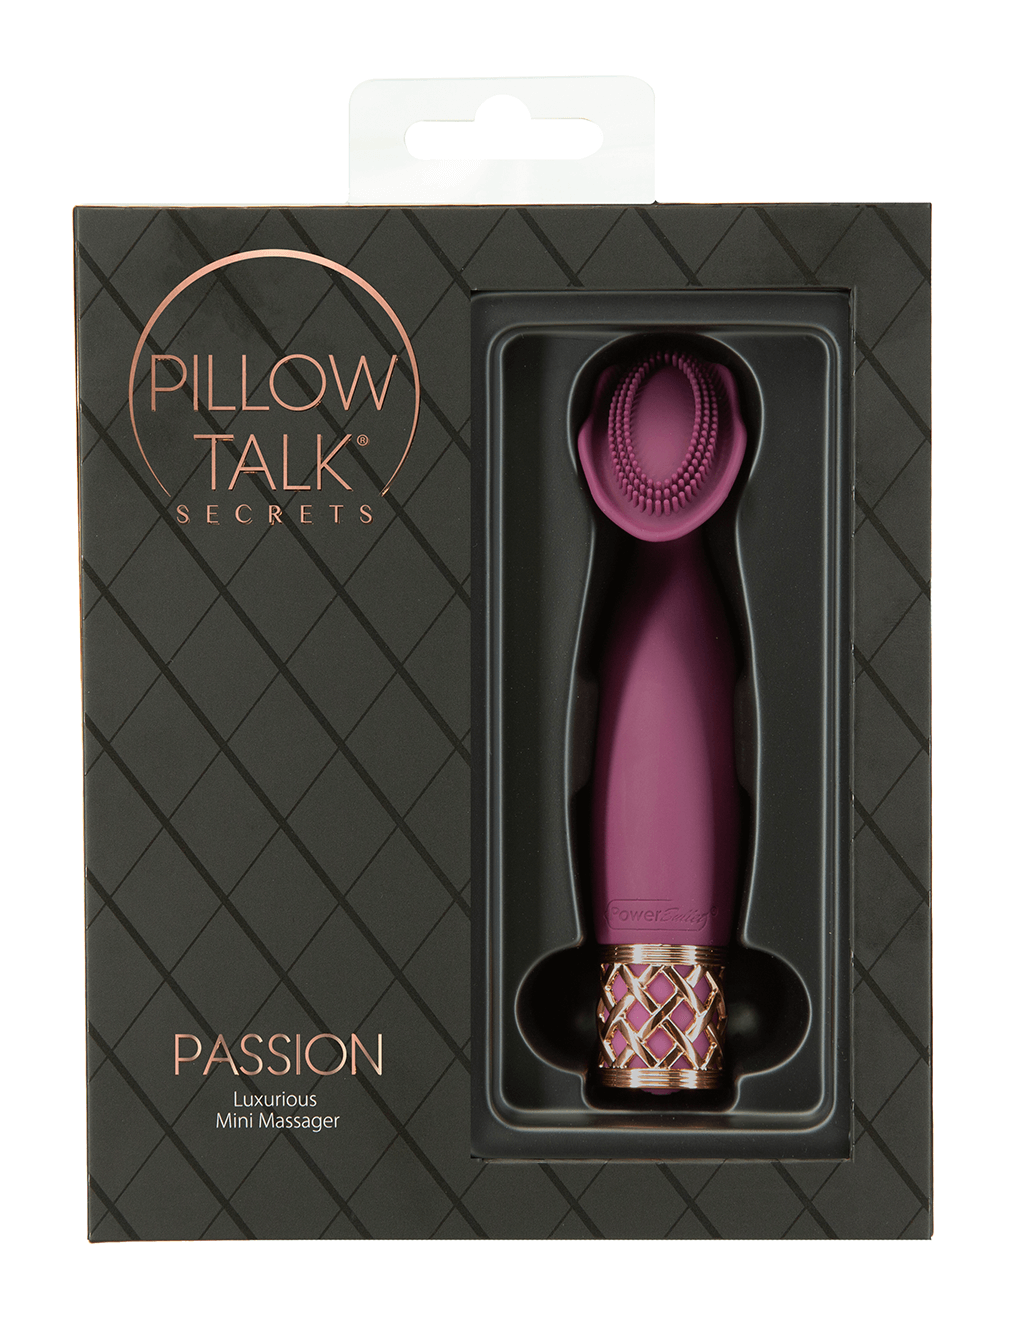 Pillow Talk Passion - Wine - Box Front